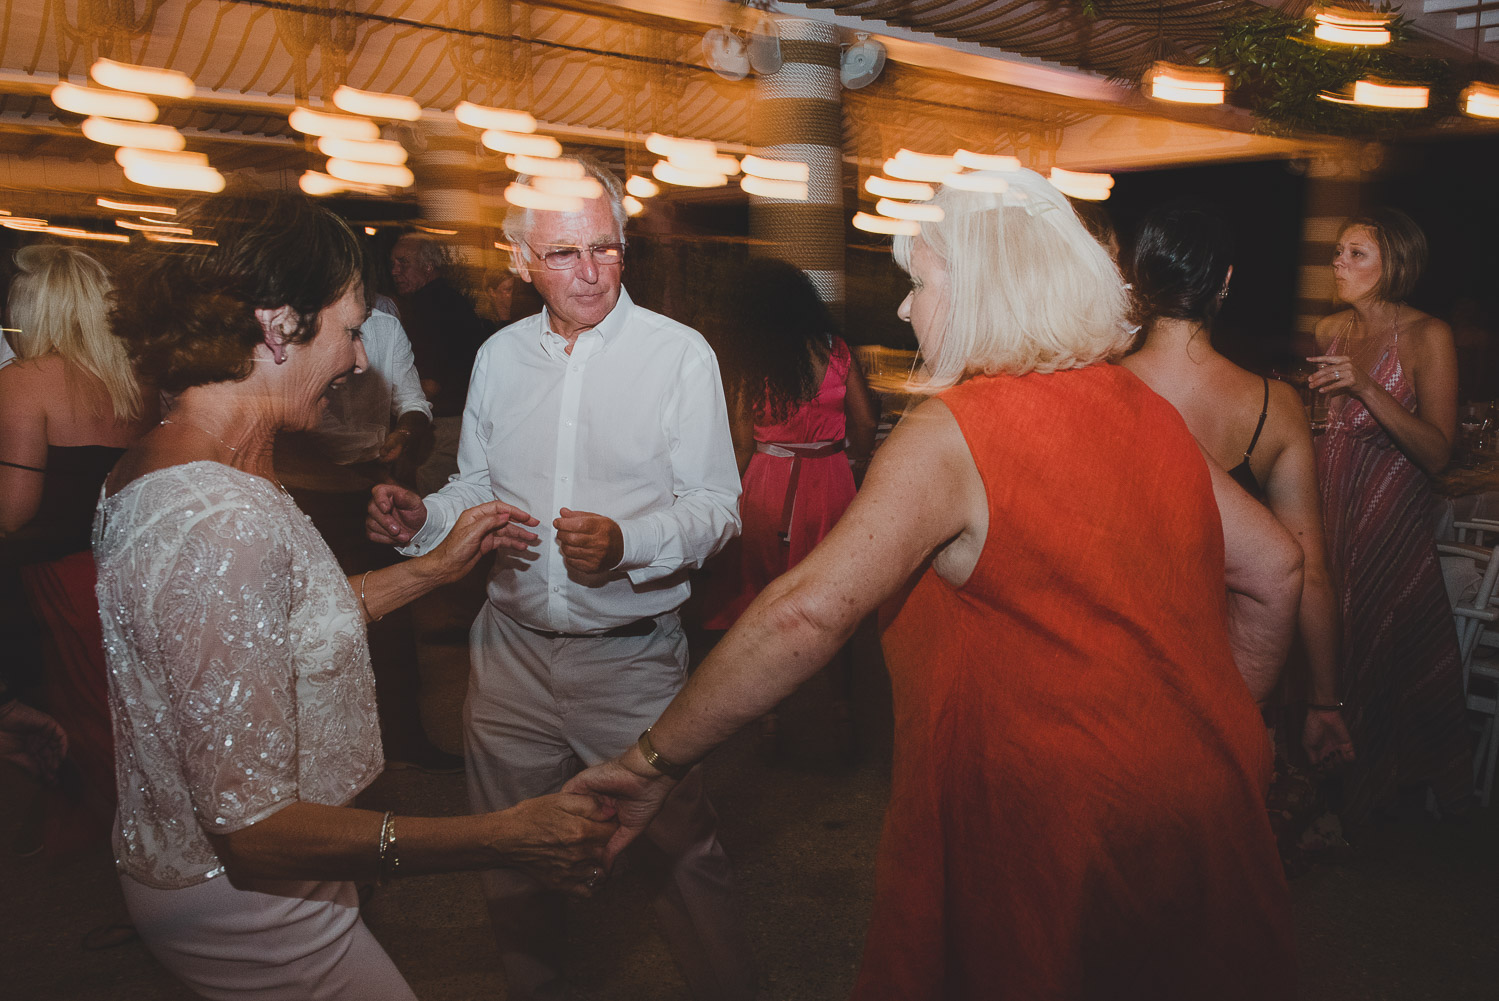 Wedding photographer Mykonos: parents dancing at Elia during Mykonos wedding.